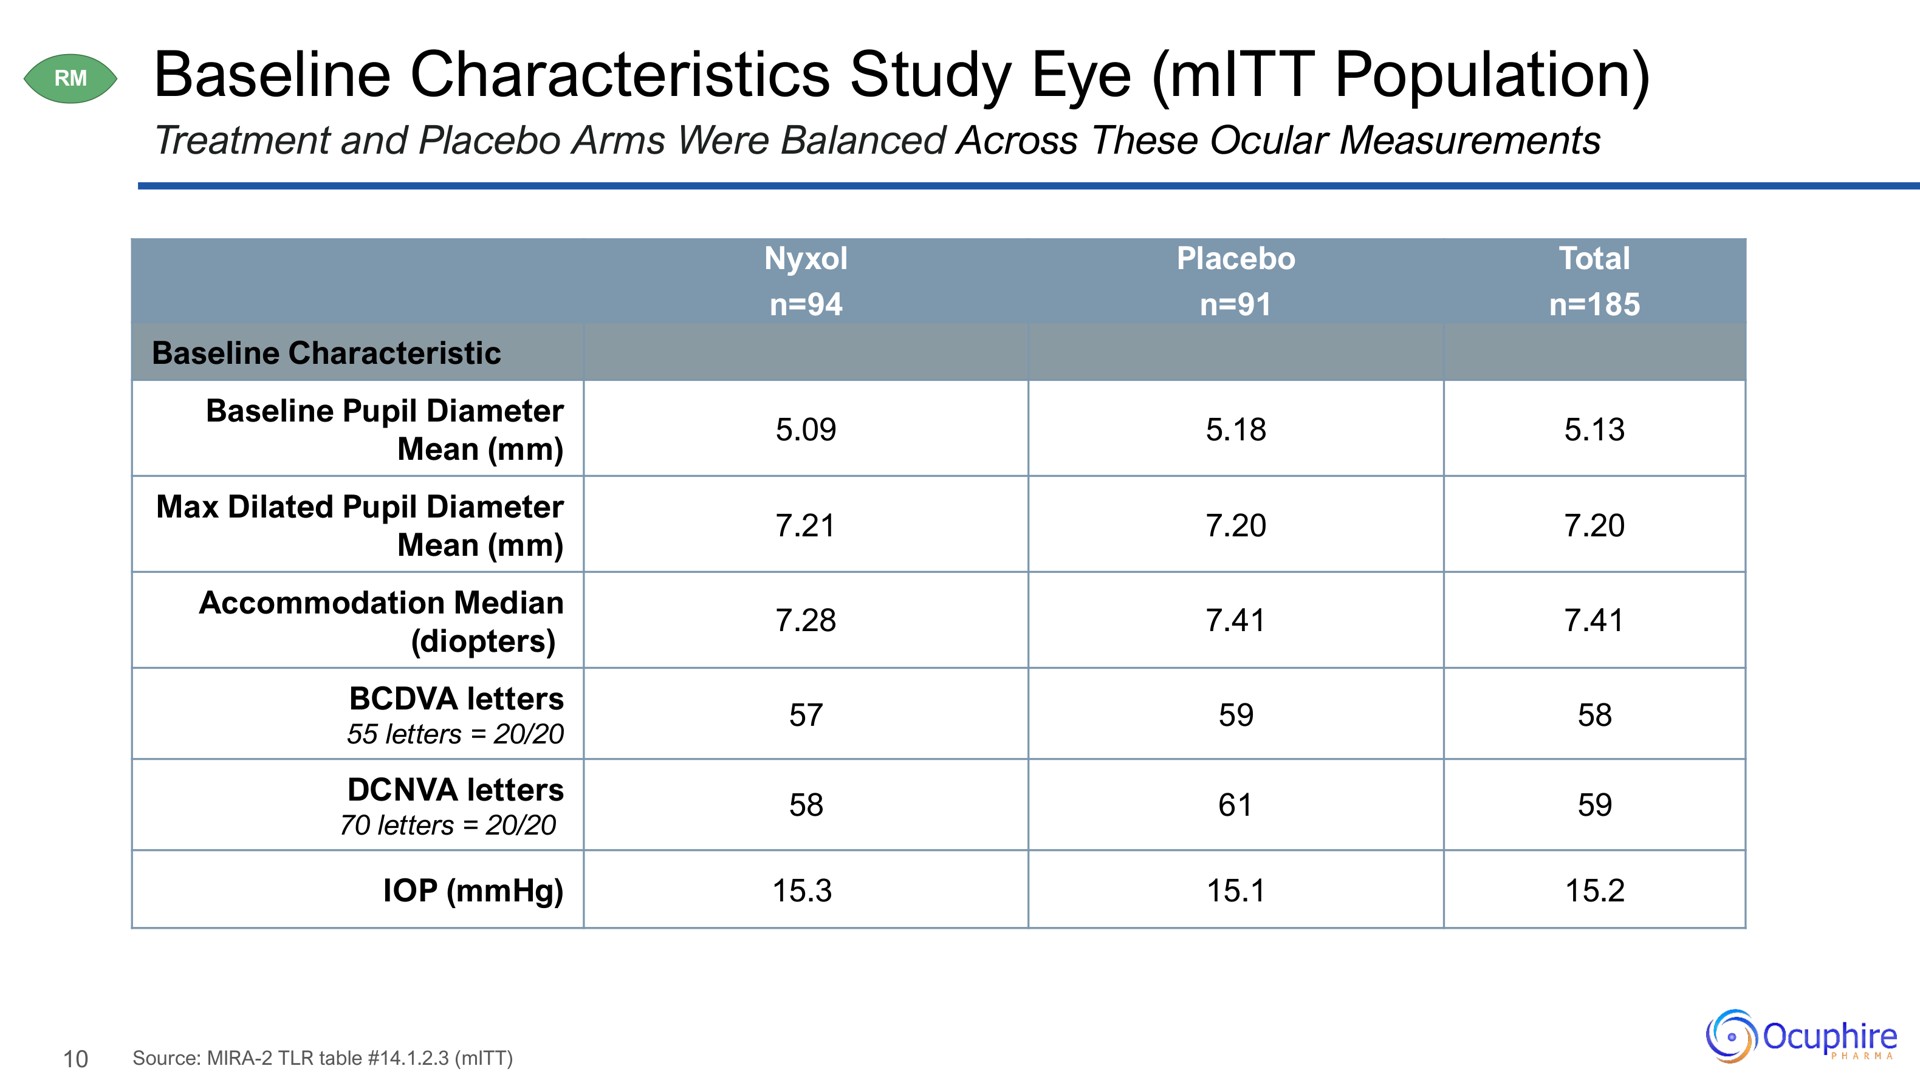 characteristics study eye mitt population remiss | Ocuphire Pharma